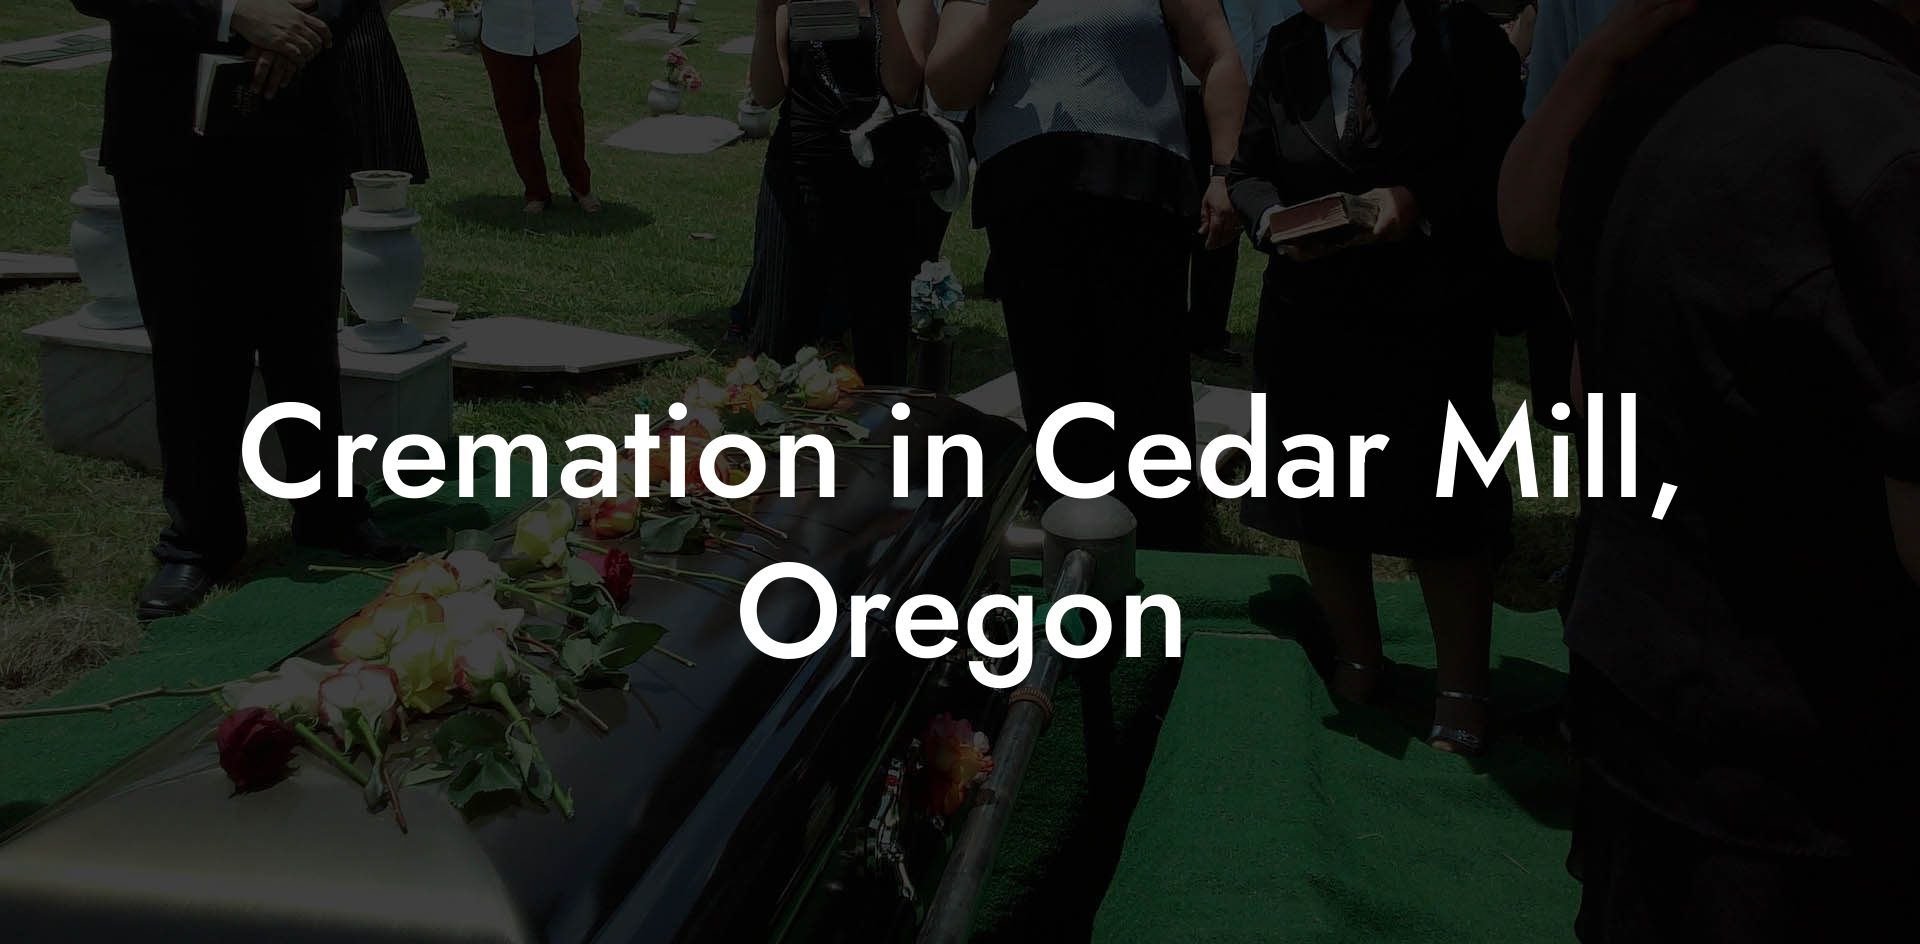 Cremation in Cedar Mill, Oregon